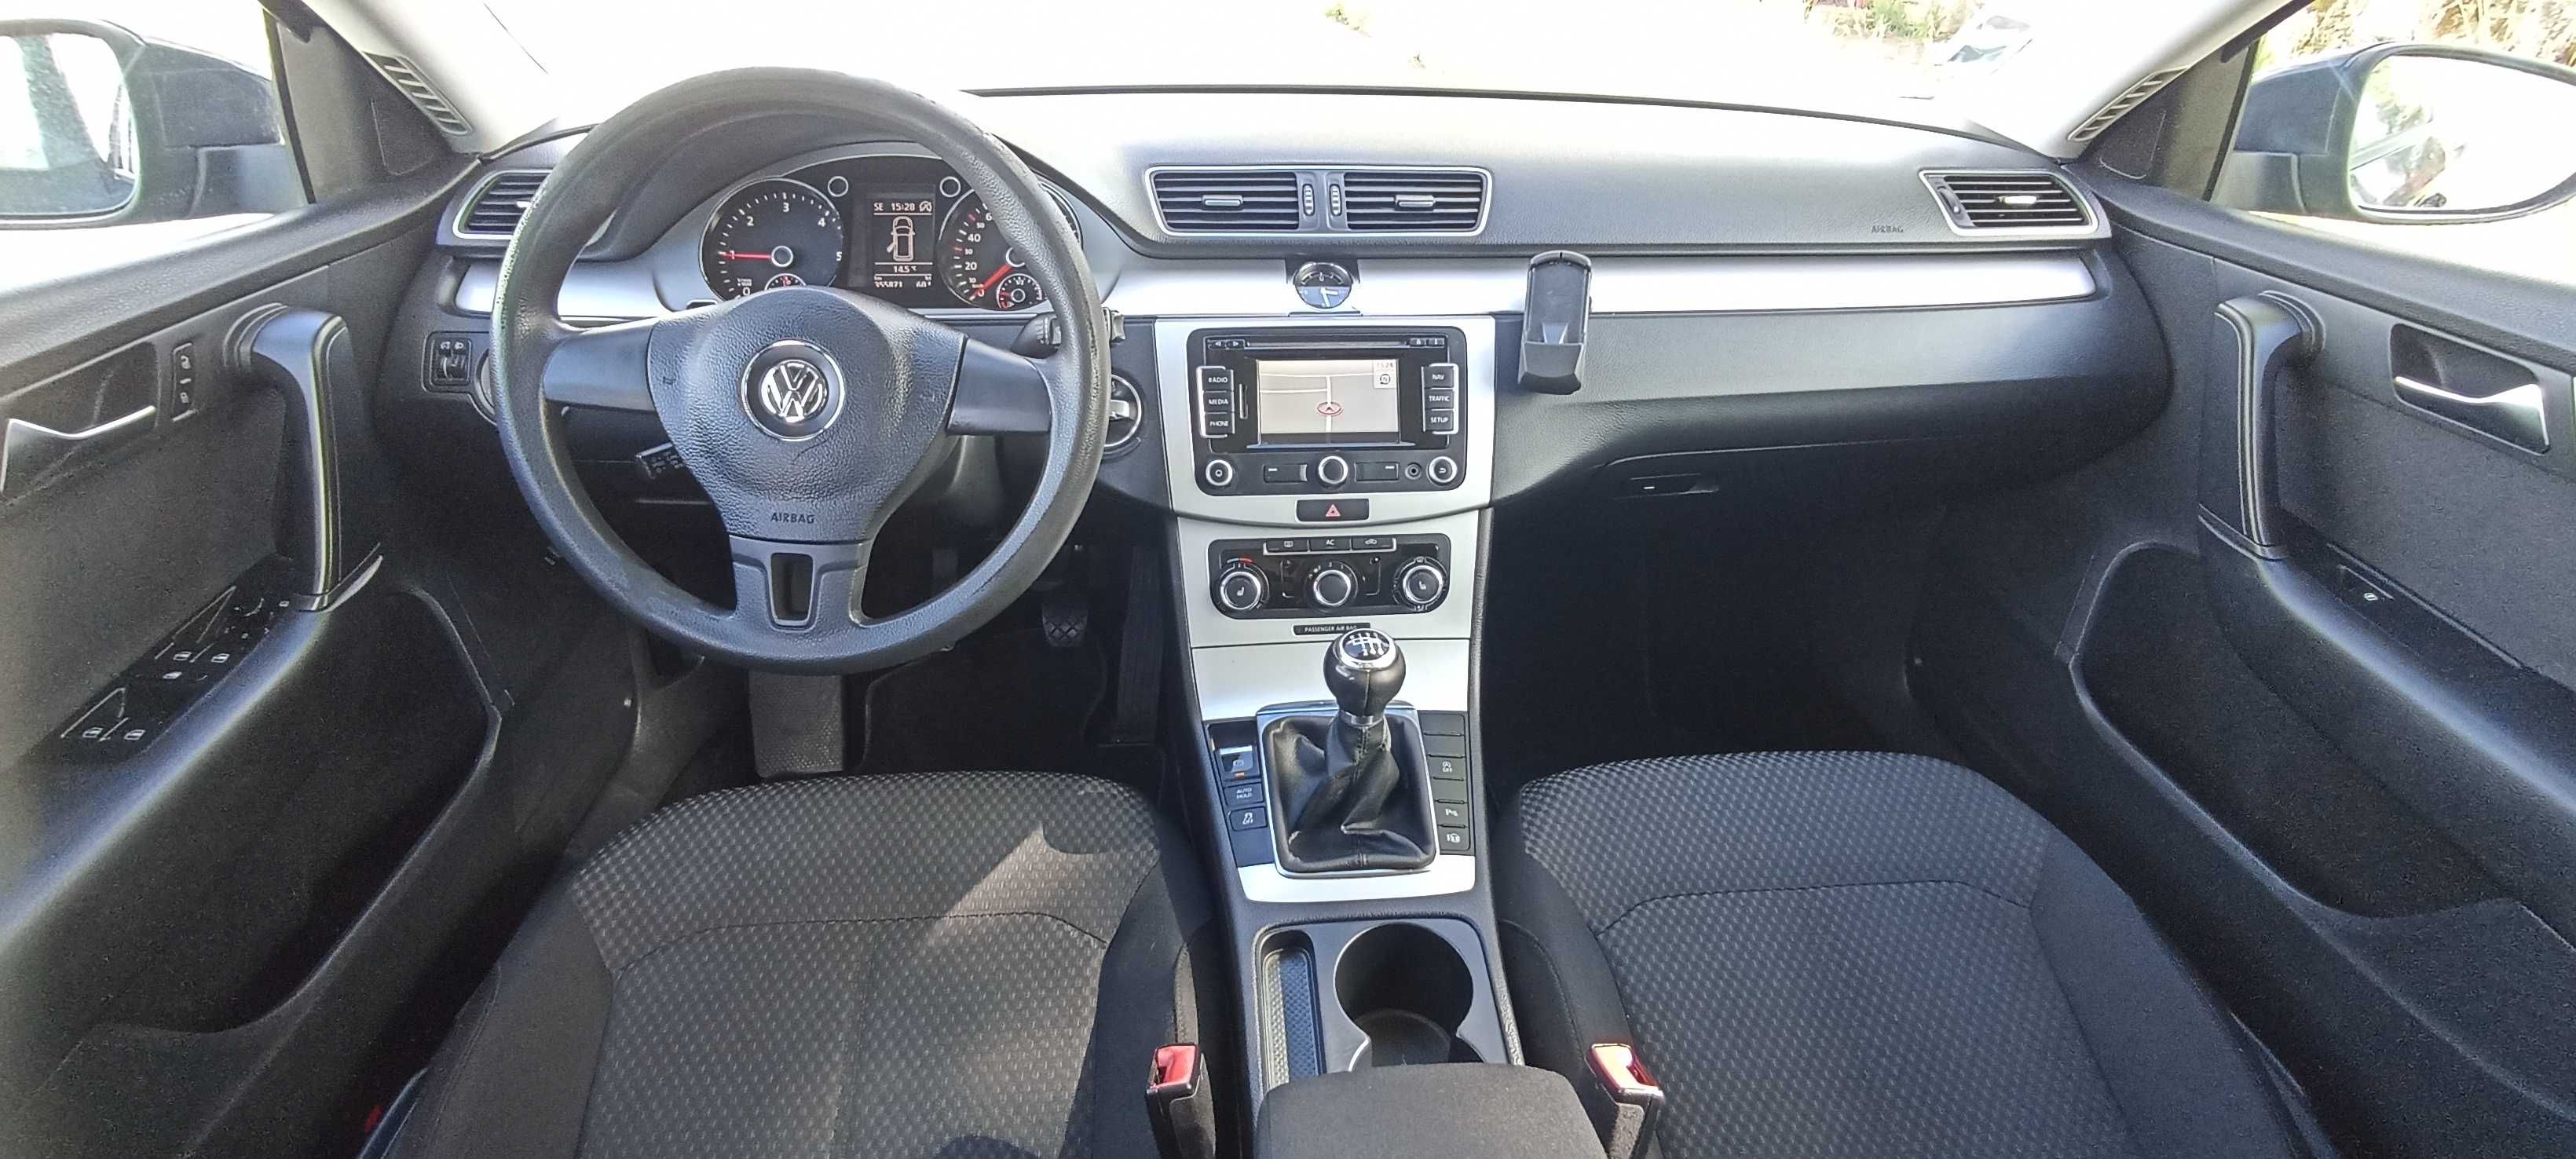 Vendo VW Passat b7 1.6 tdi